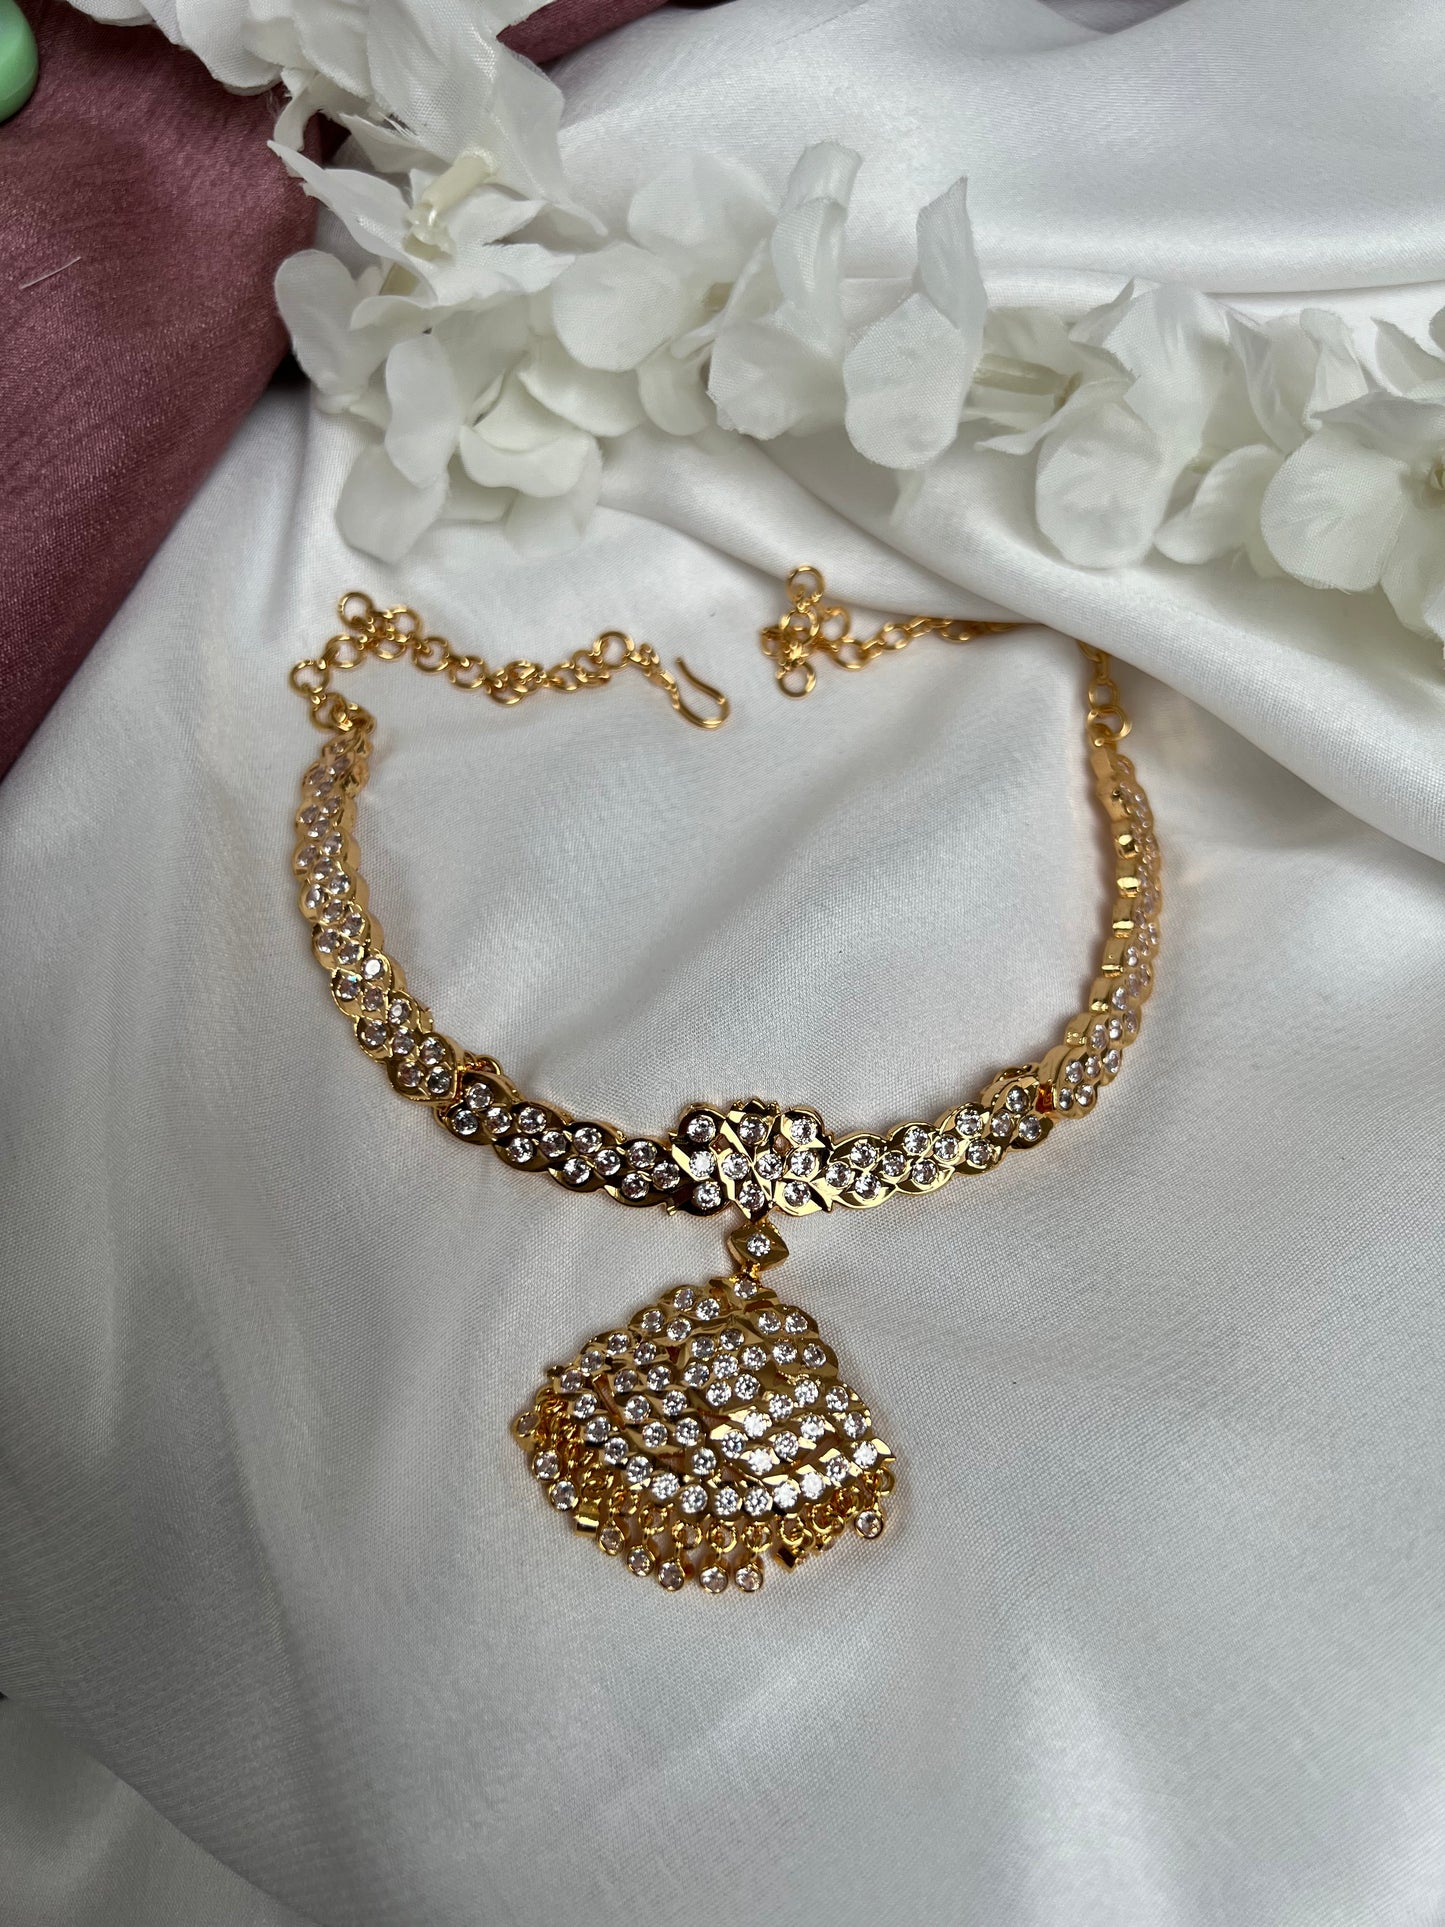 Attigai necklace choker 2 layered N3073